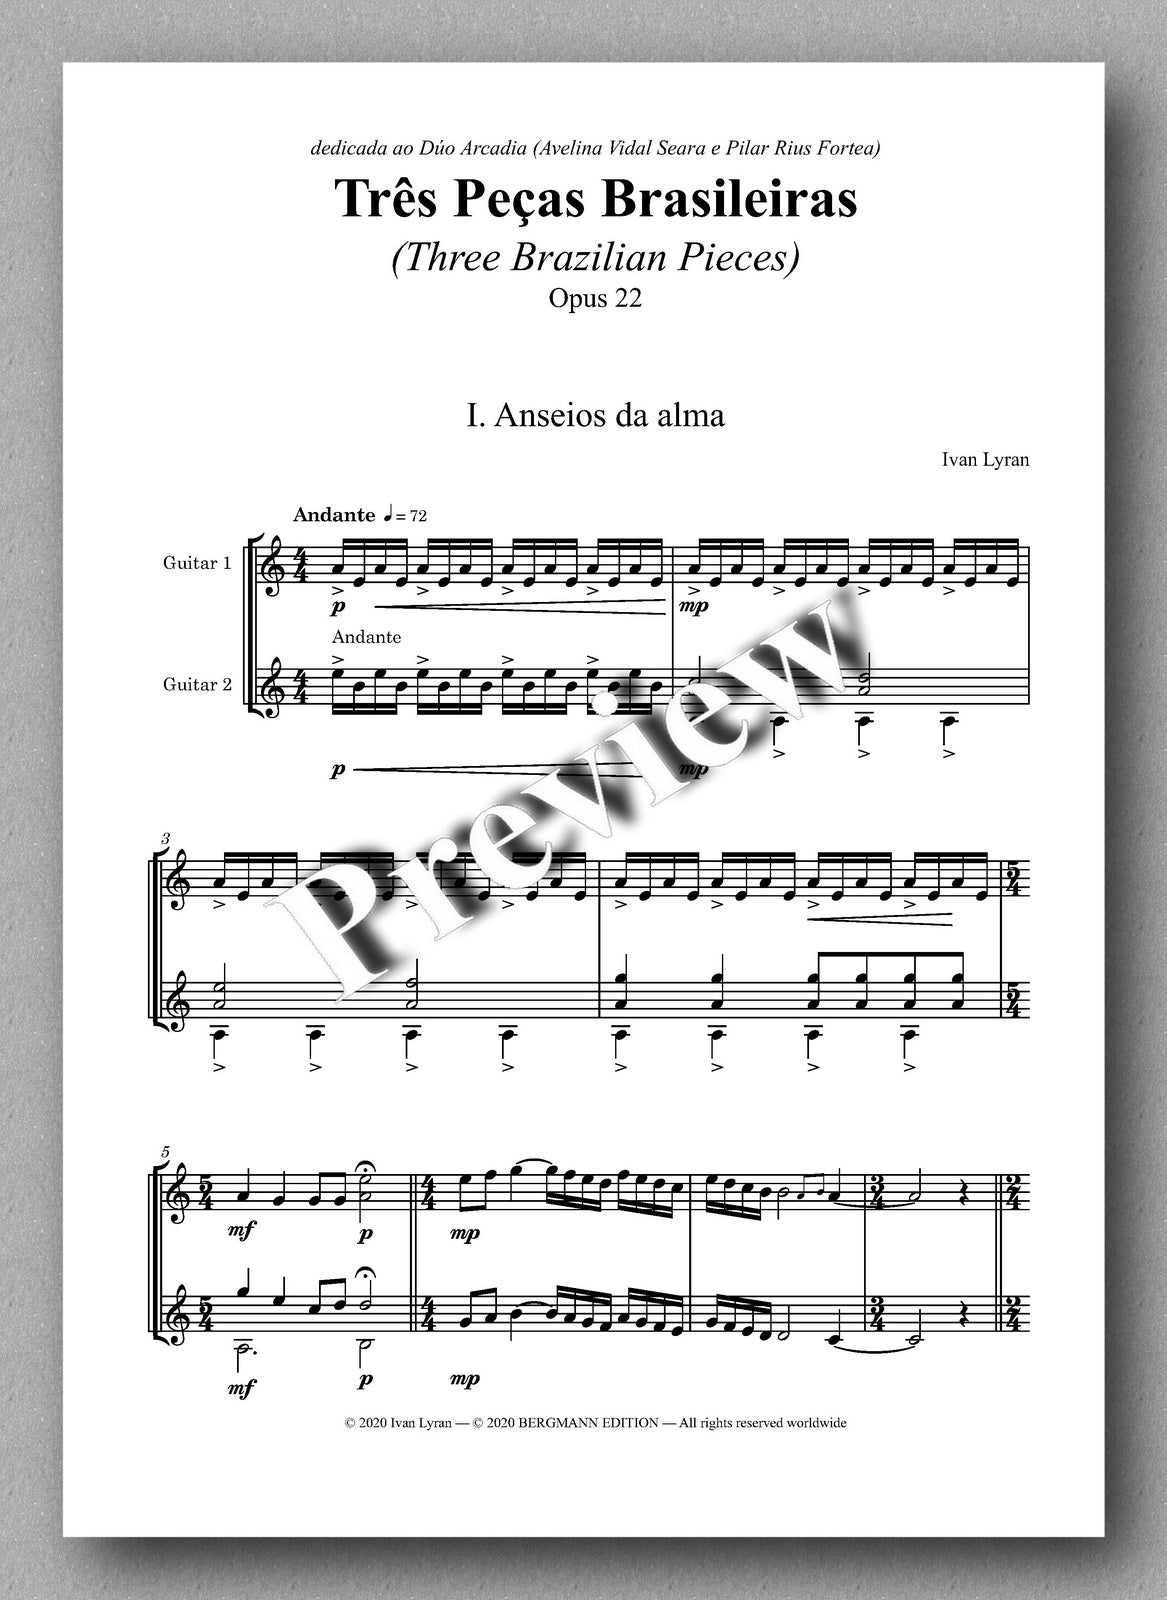 Ivan Lyran, Três Peças Brasileiras, Opus 22 - preview of the music score 1